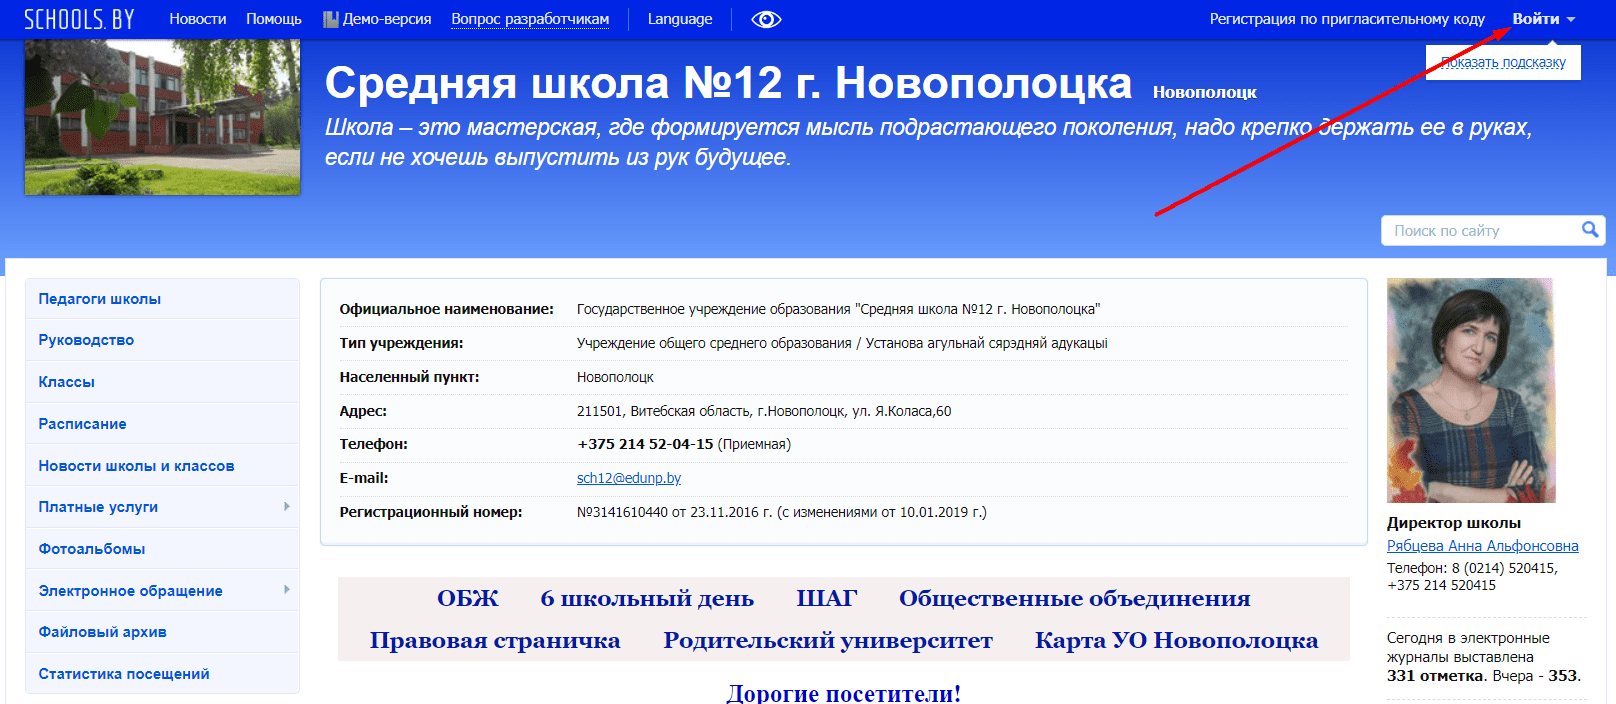 Средняя школа №12 г. Новополоцка (12novopolotsk.schools.by)